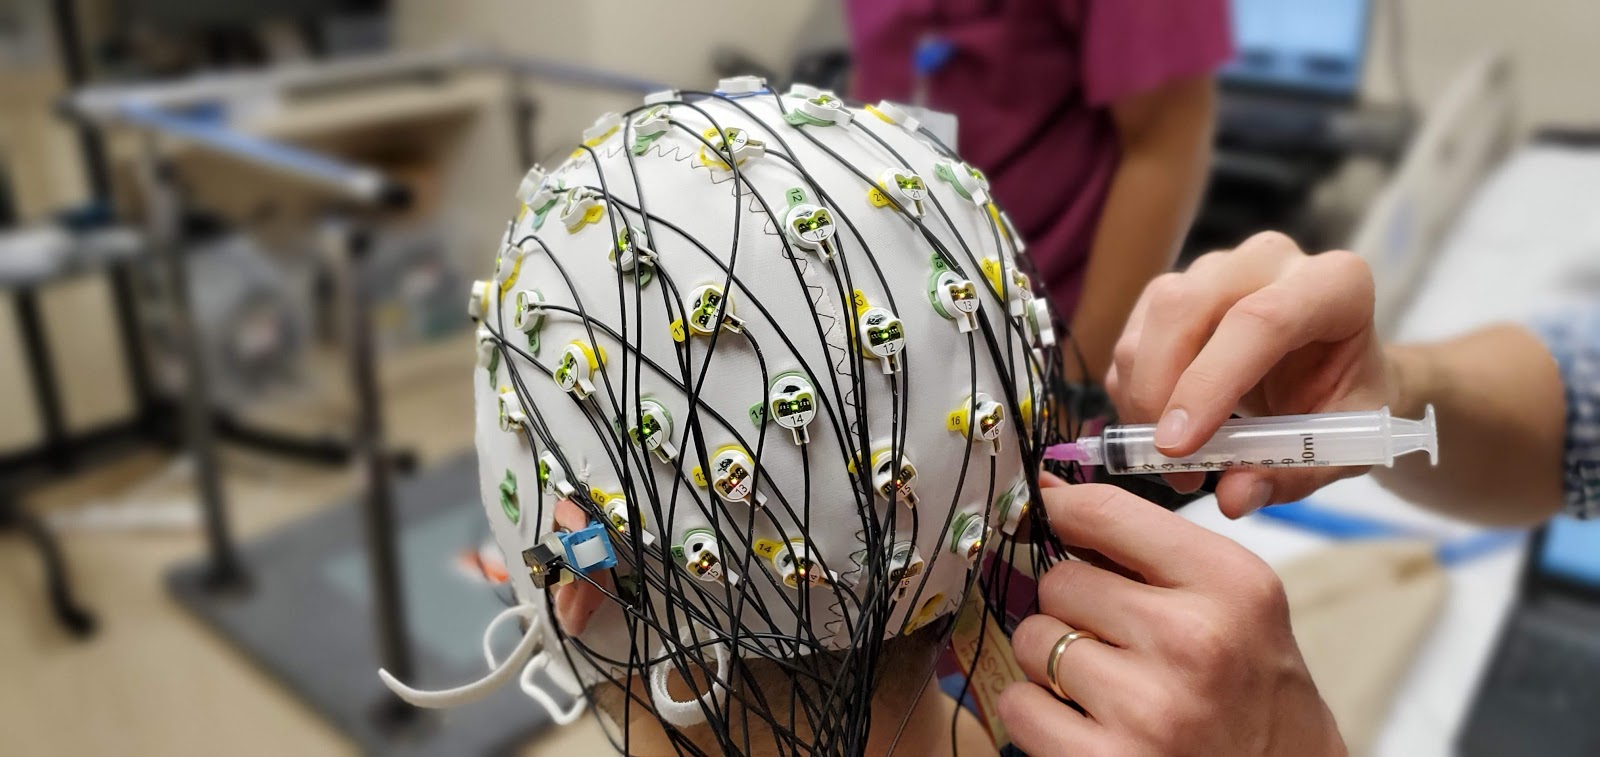 EEG Cap